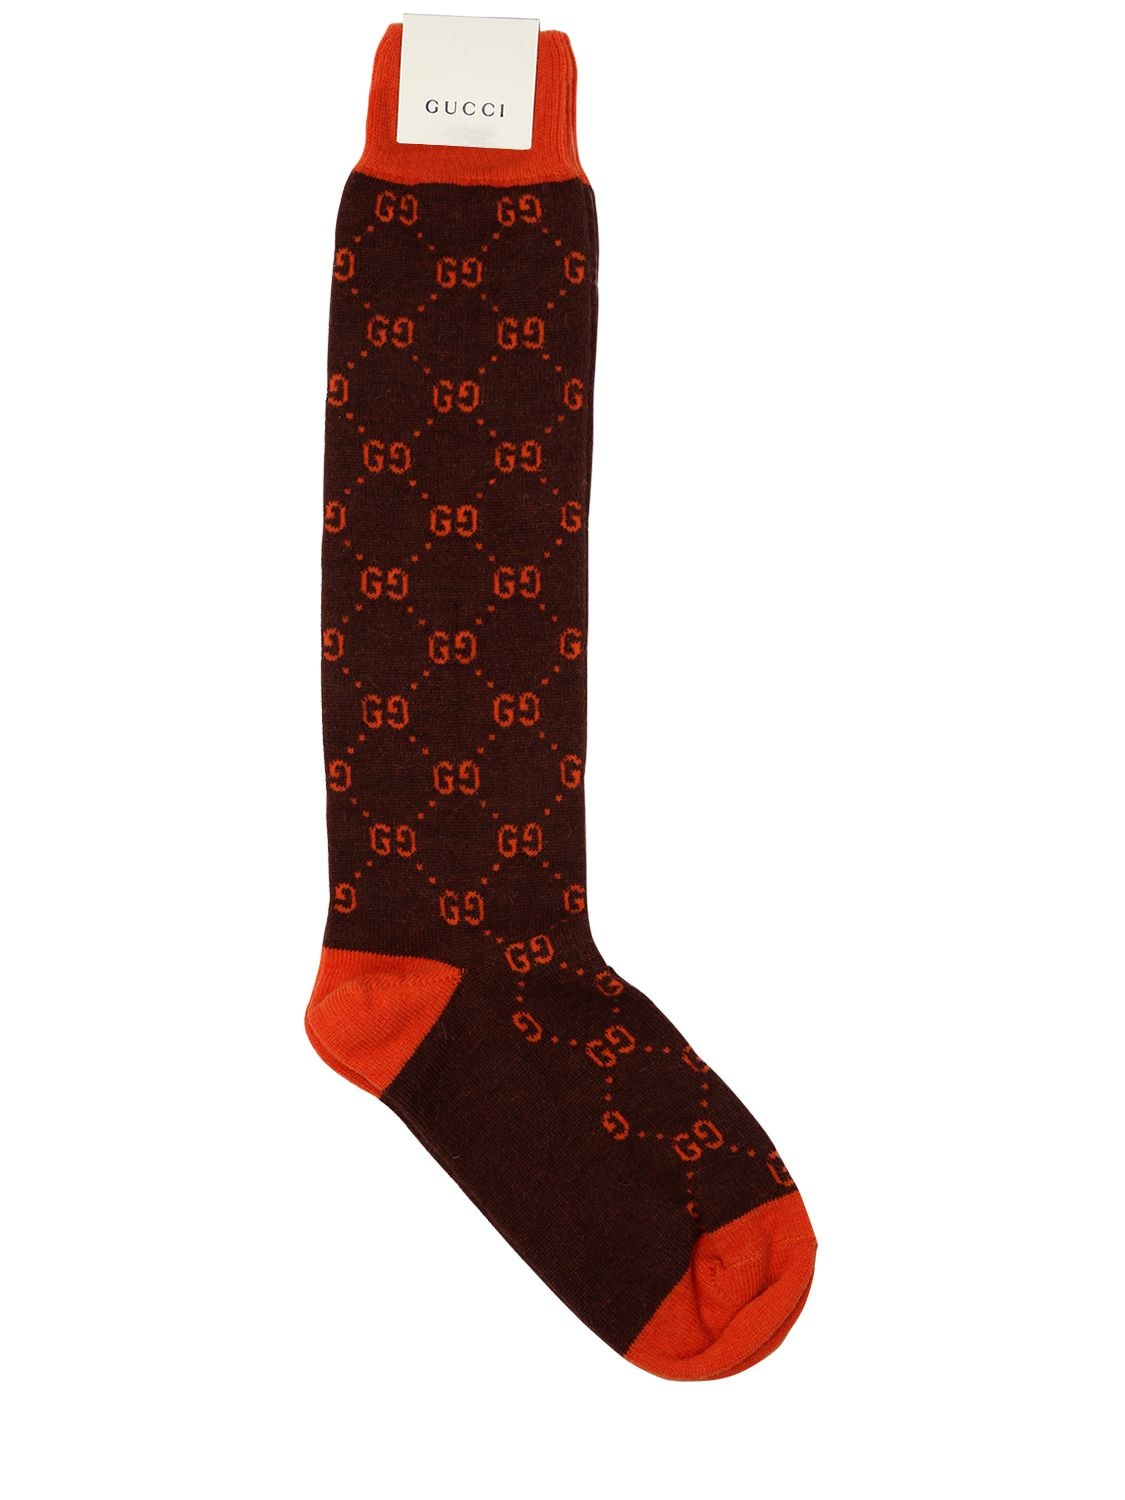 Gucci Gg Logo羊毛混纺针织袜子 In Brown,orange